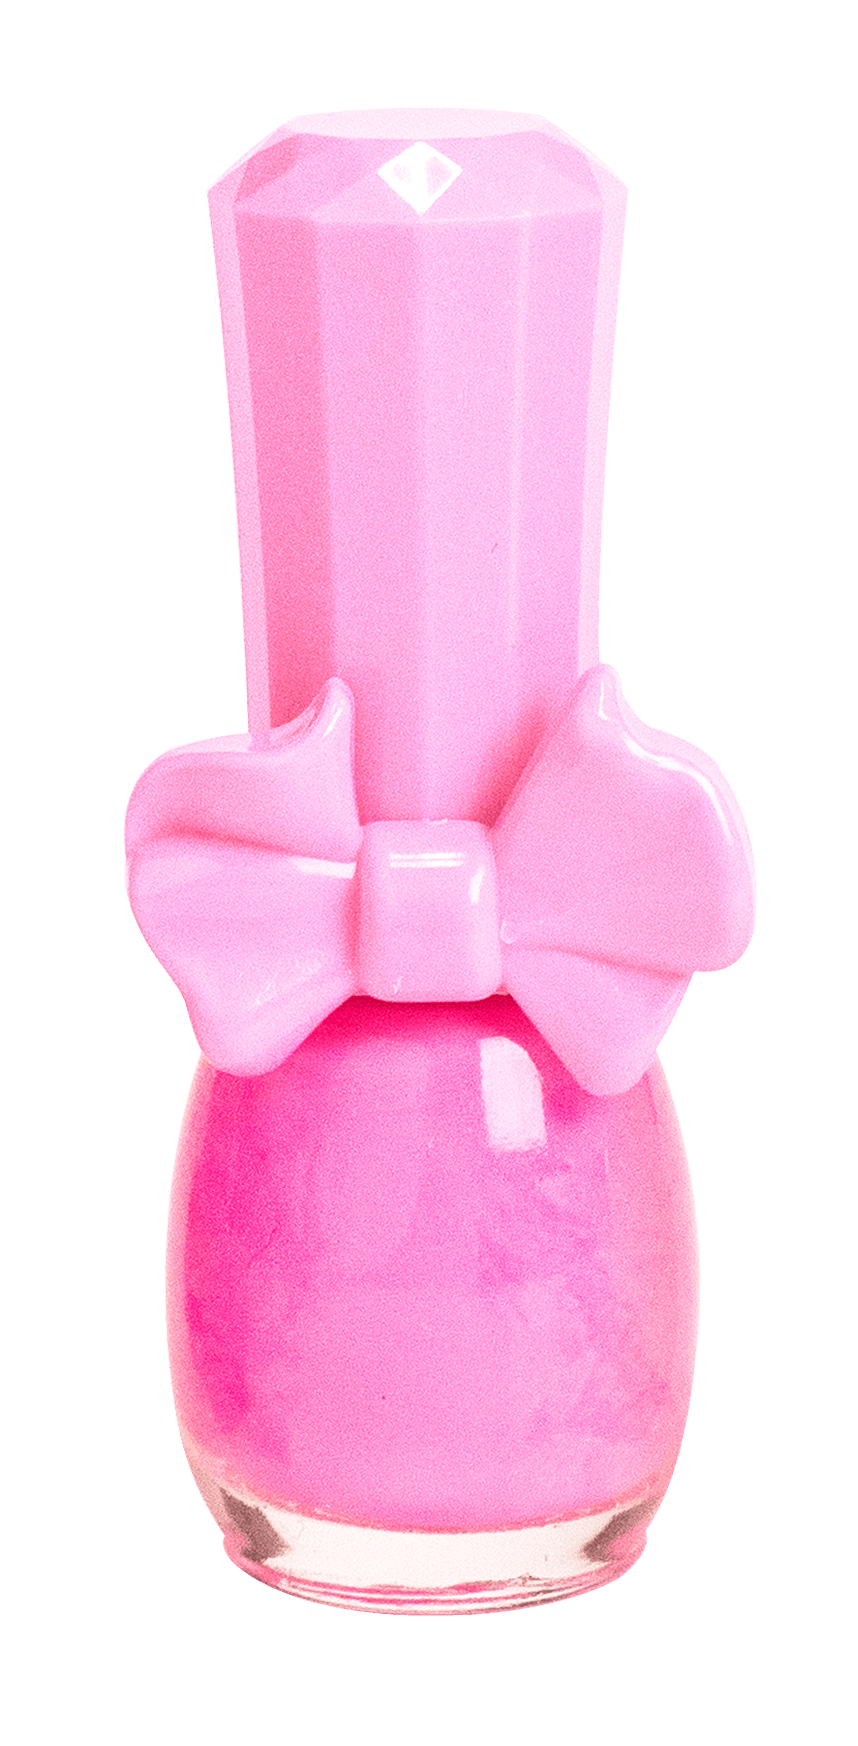 Pinky Cosmetic I'm Pinky Kids Nail Paint Neon Pink - Çocuklar İçin Soyulabilir Oje